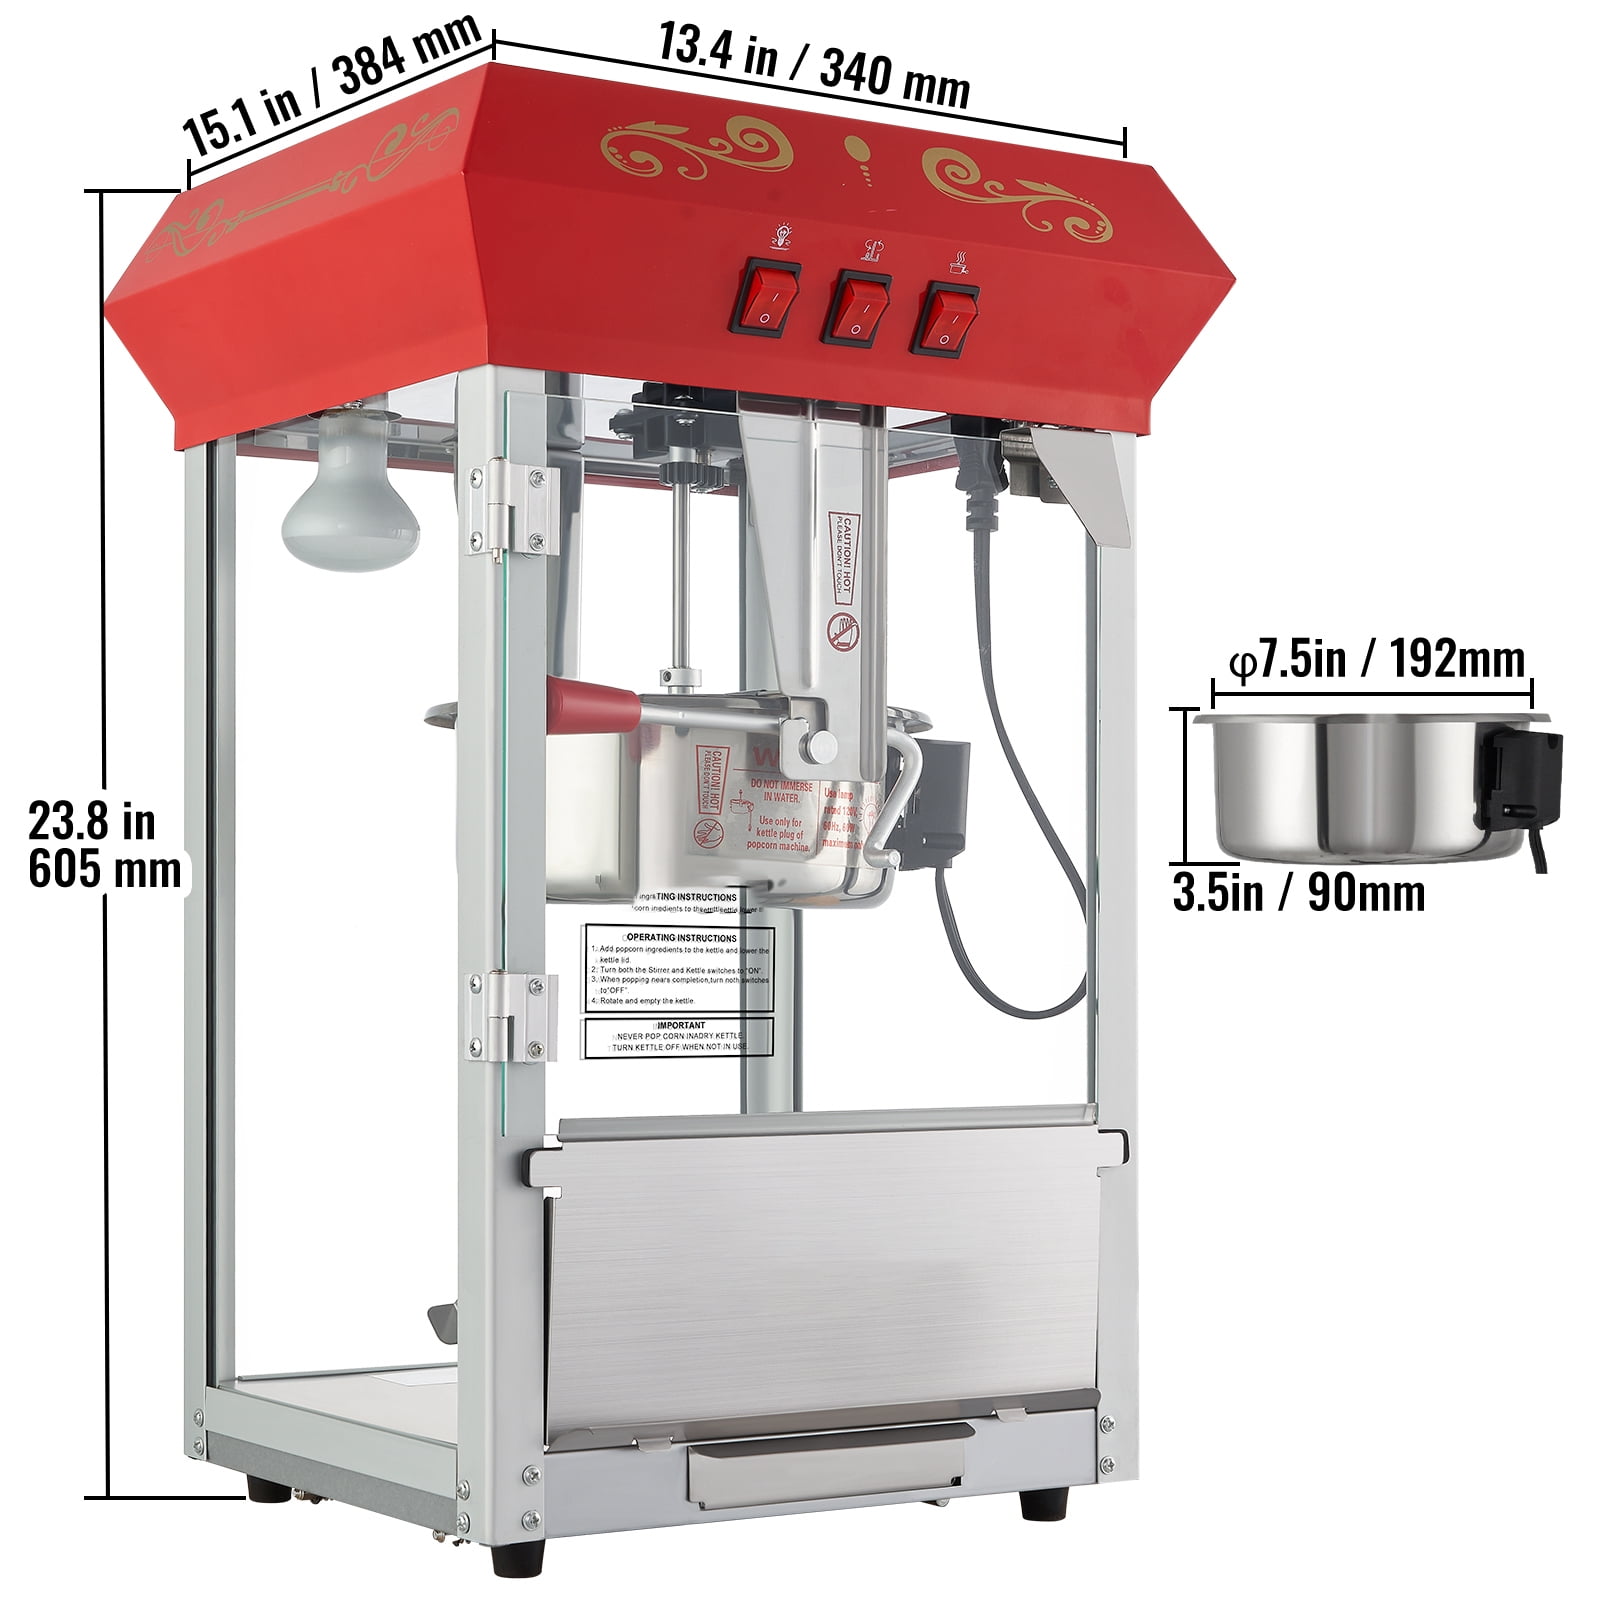 VEVOR Popcorn Popper Machine 12 Oz Countertop Popcorn Maker 1440W 80 Cups  Red